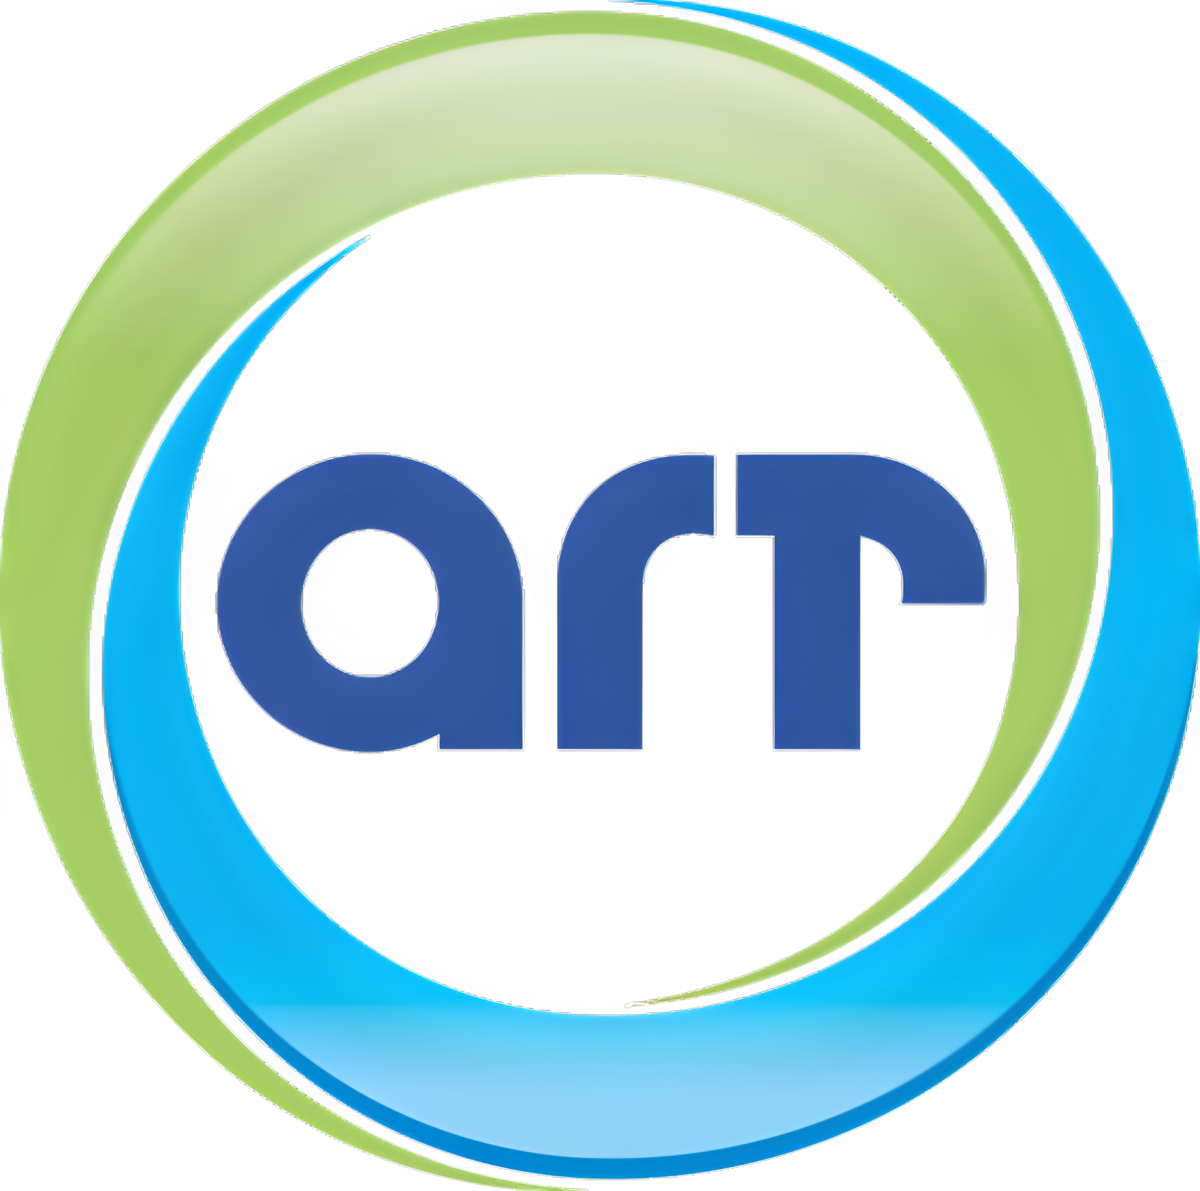 Arab Radio and Television Network - Wikipedia